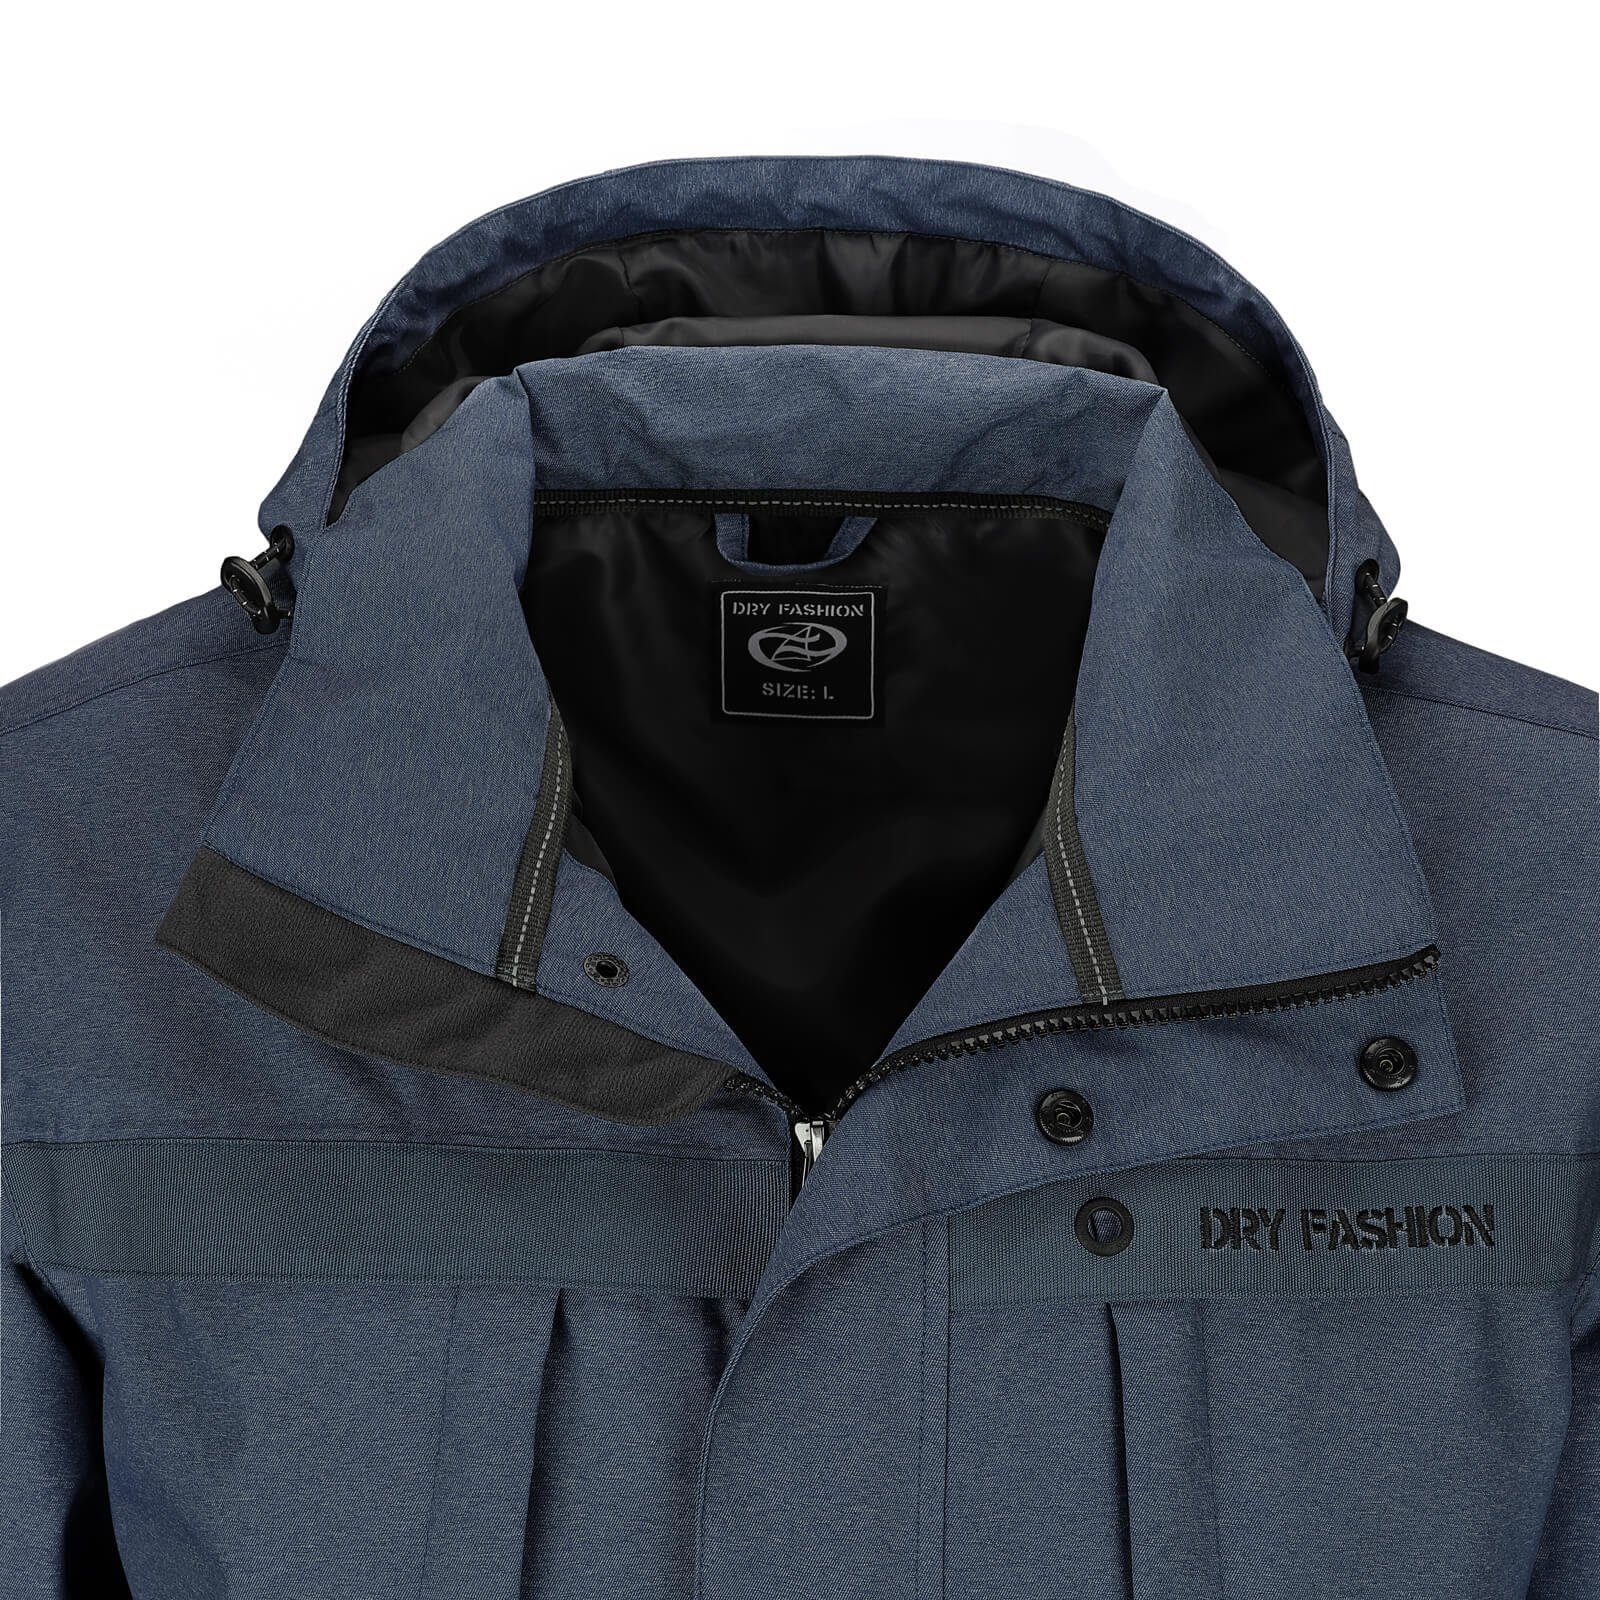 Dry Fashion Funktionsjacke Herren Innenfutter Wasserdicht mit Emden navy melange Outdoor-Jacke Meliert - Jacke